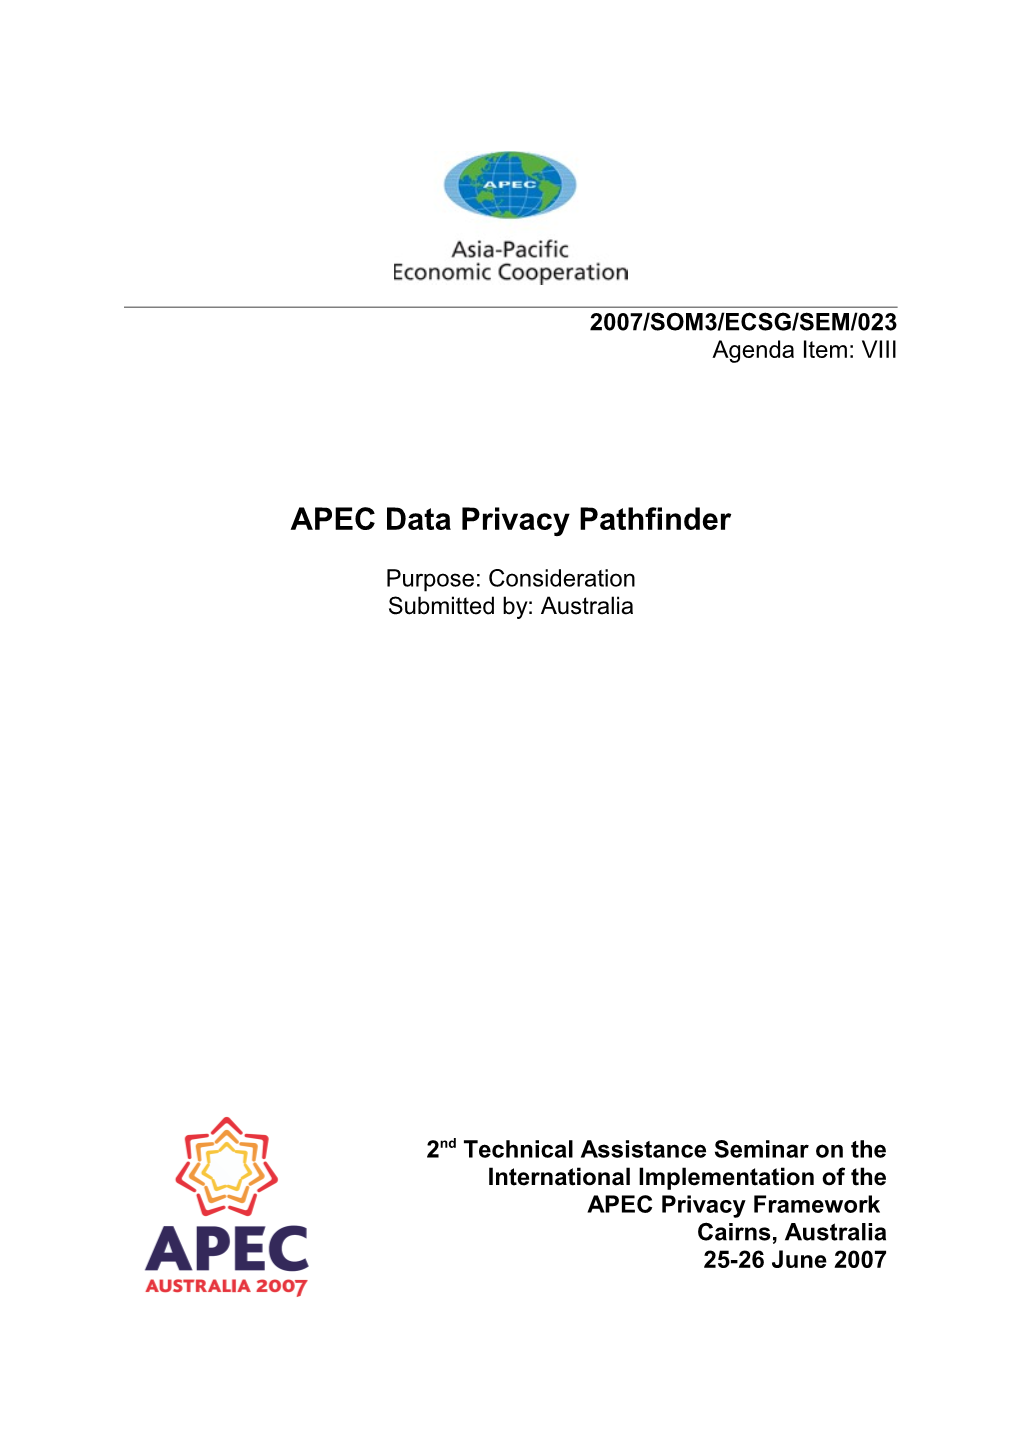 APEC Data Privacy Pathfinder